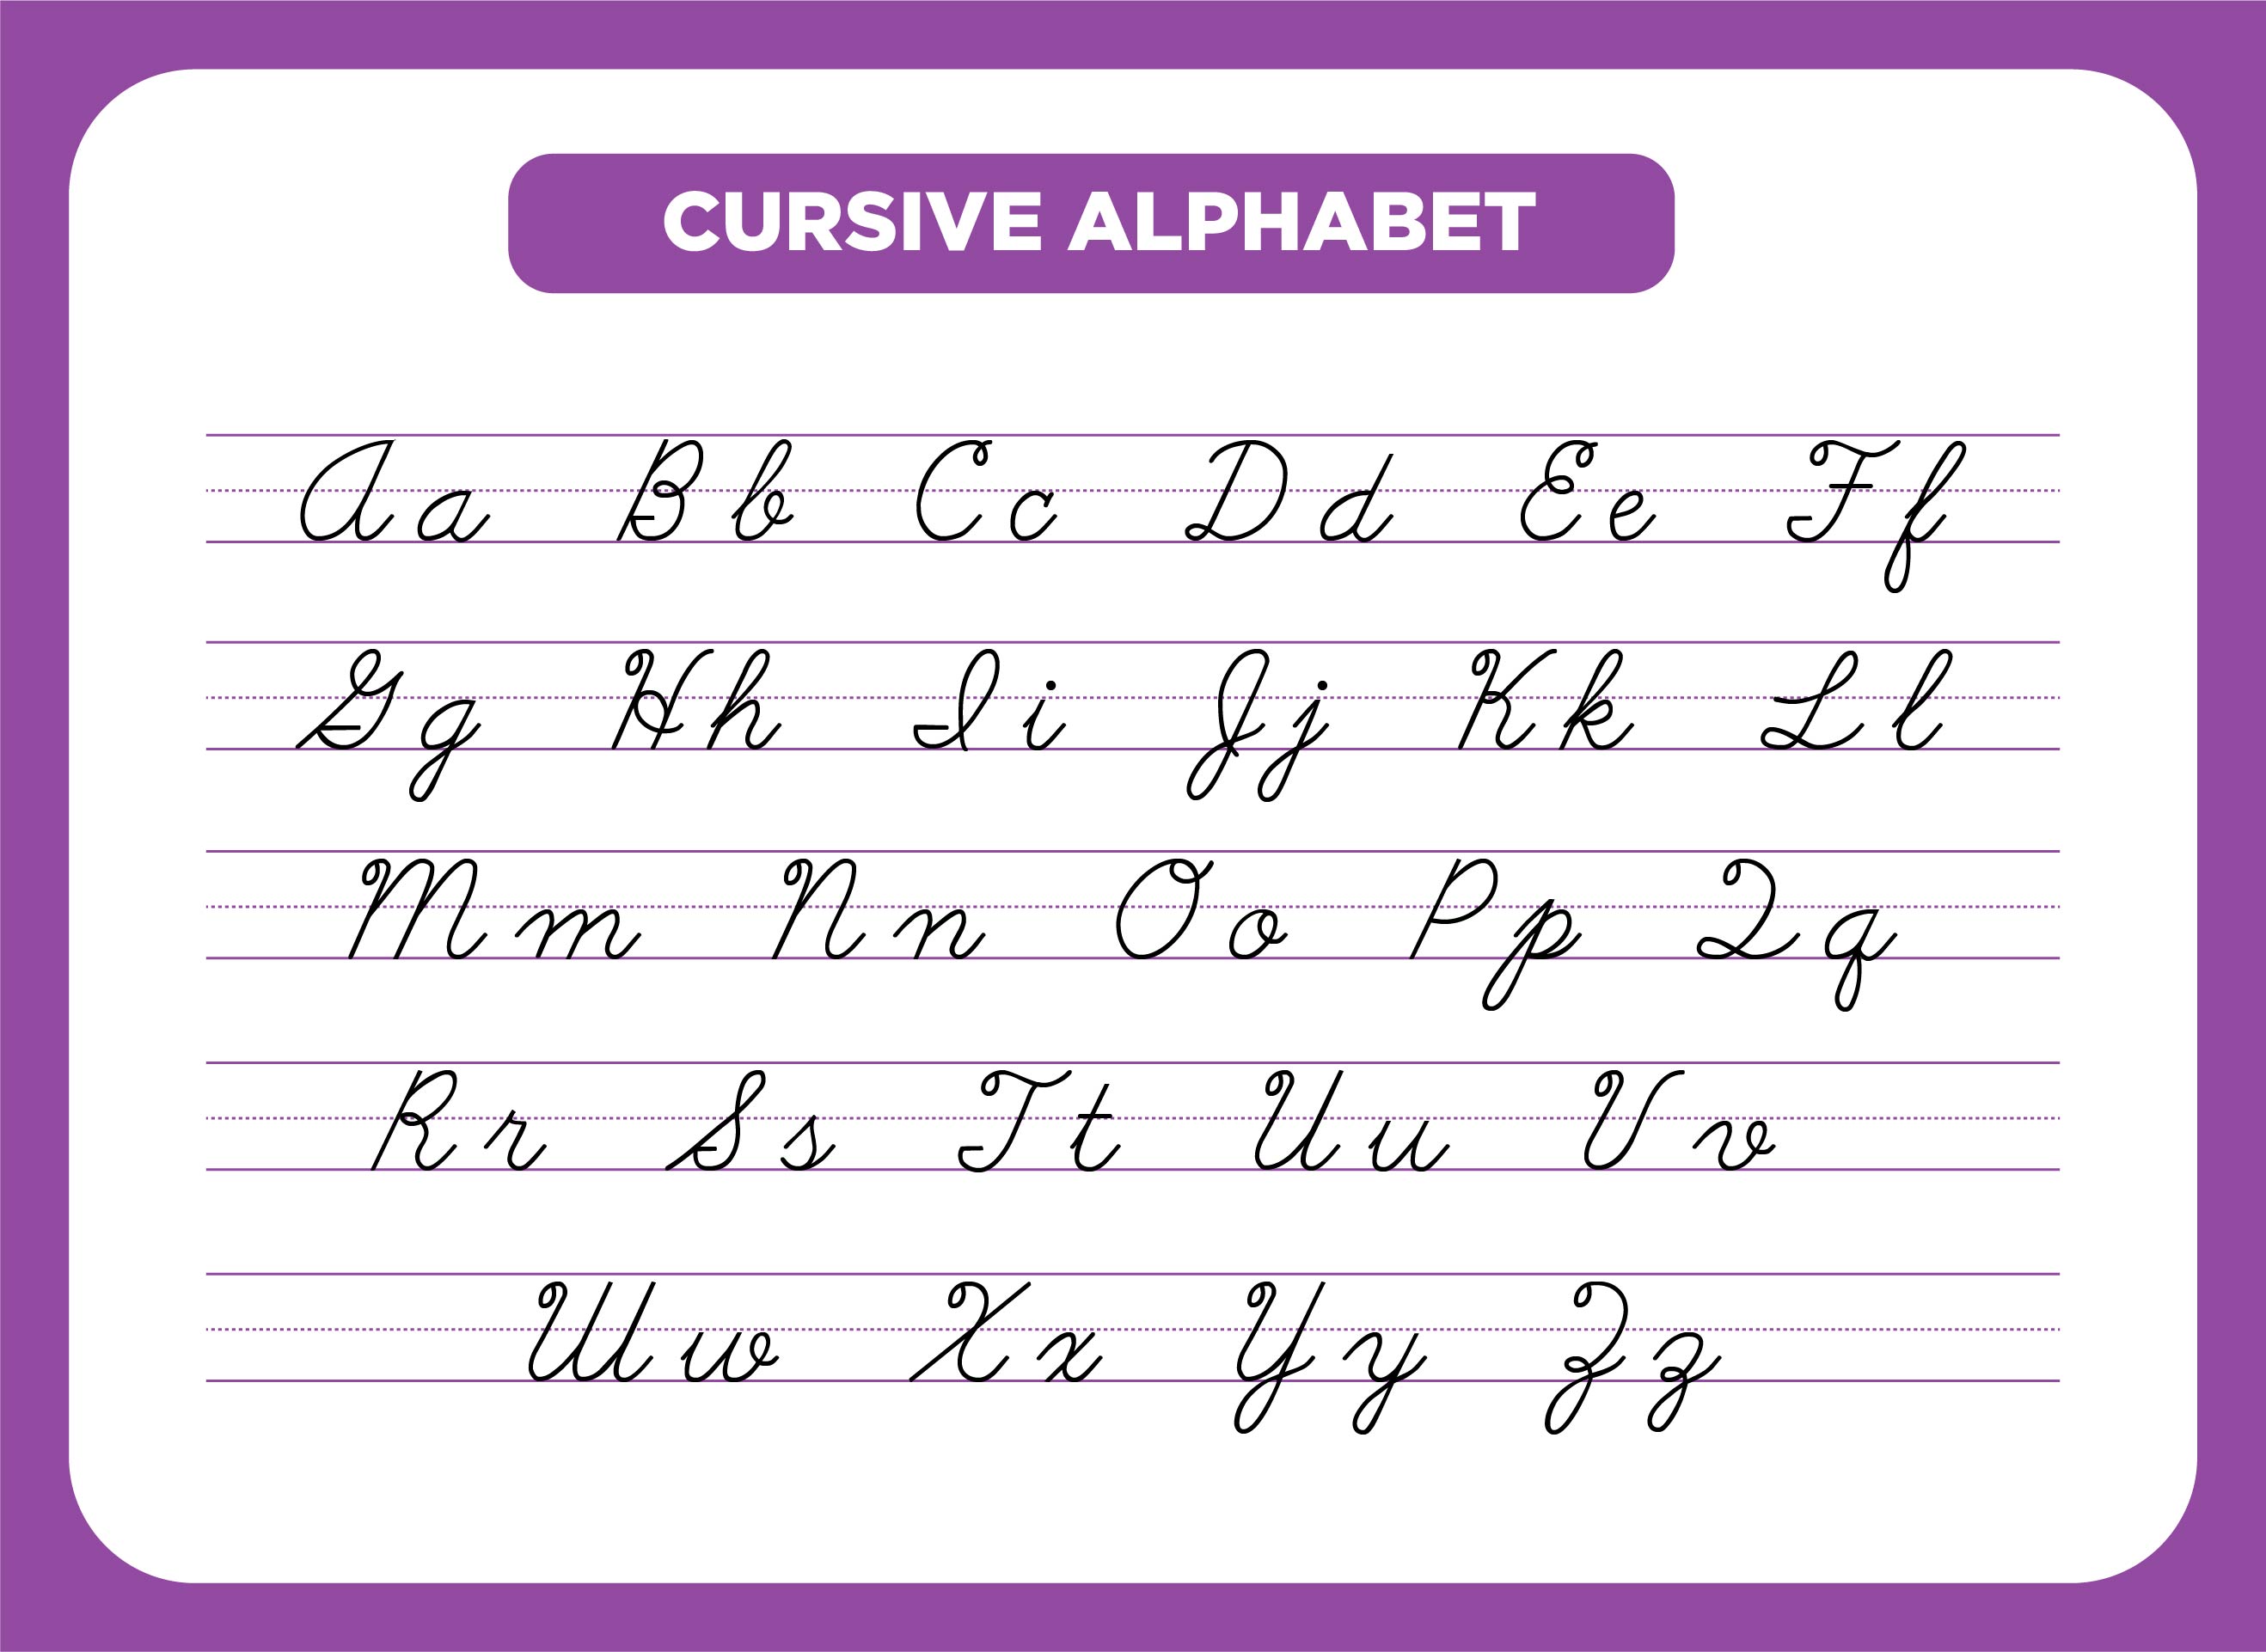 5 Best Images of Printable Cursive Alphabet - Free Printable Cursive ...